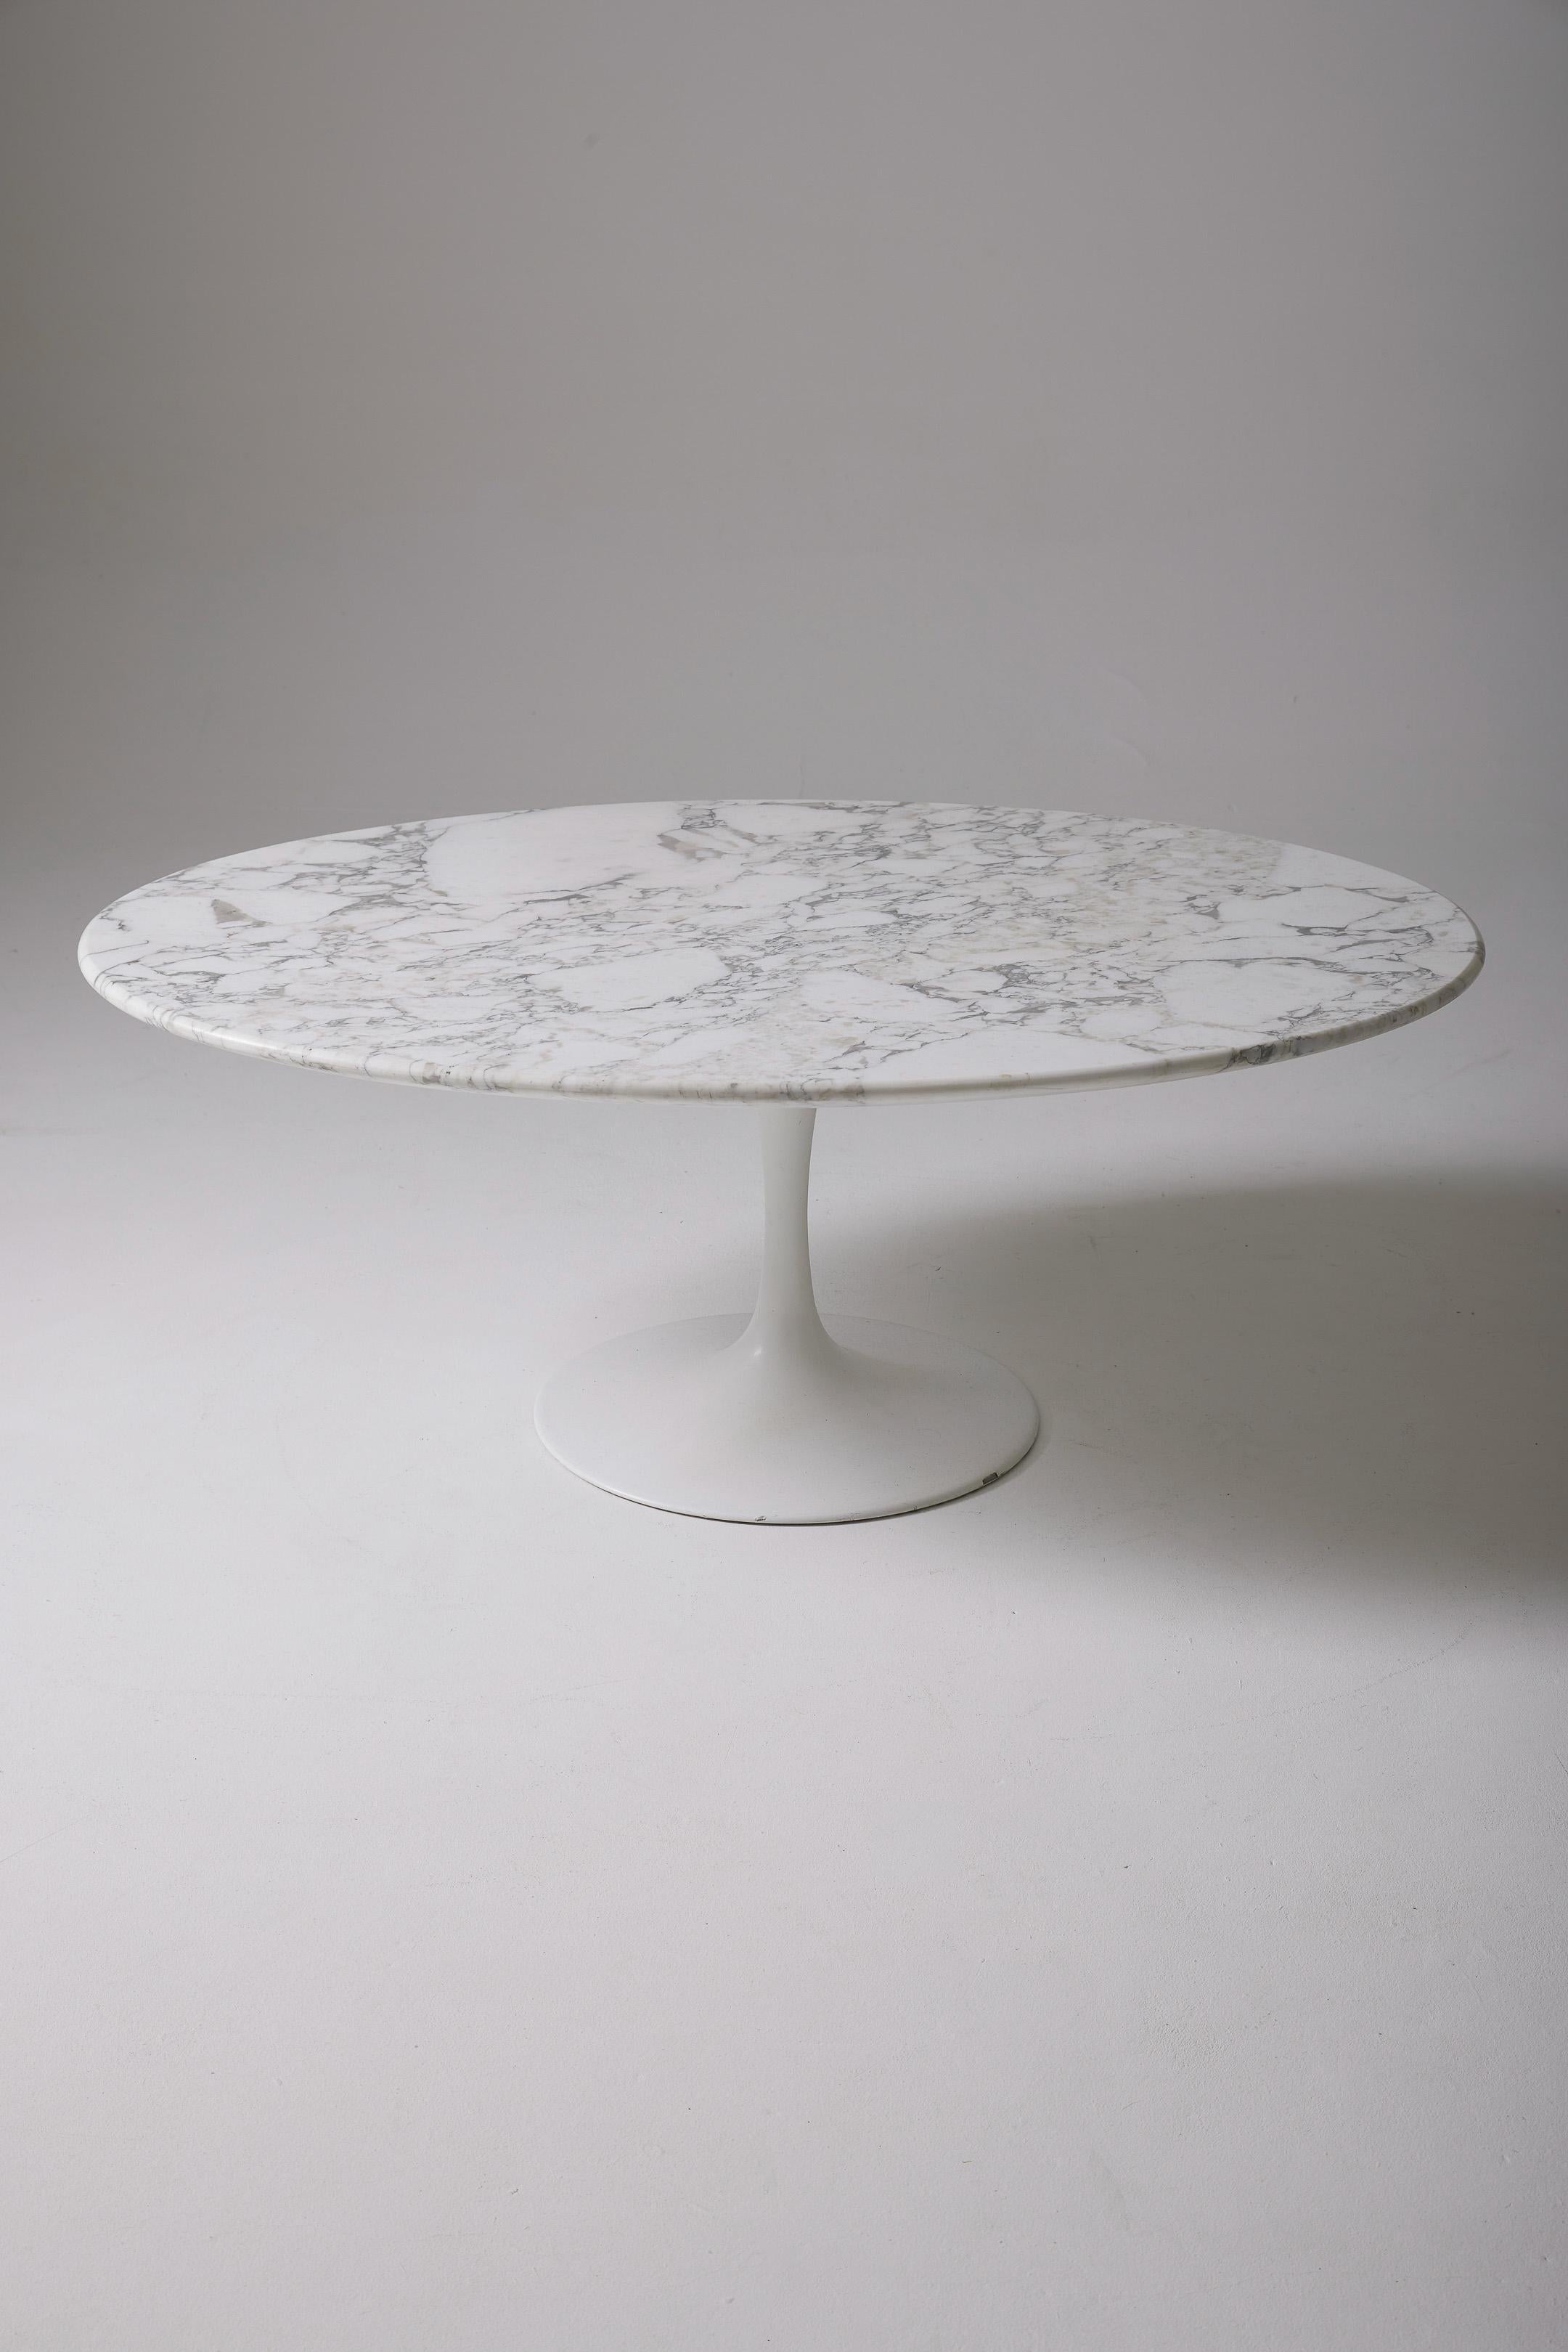 20th Century Eero Saarinen Pedestal Table For Sale